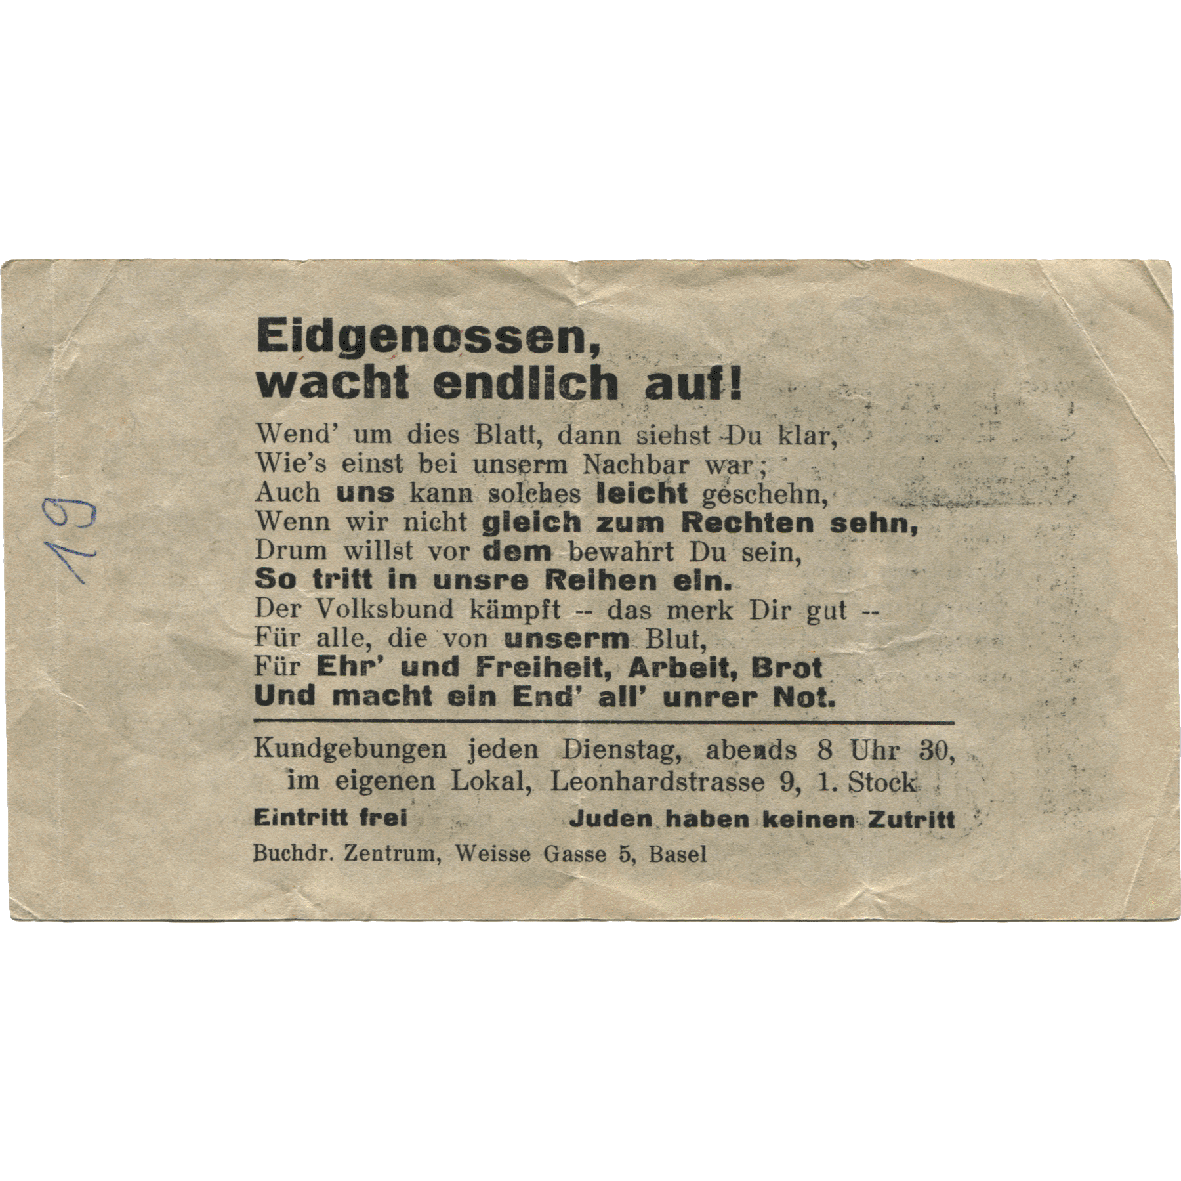 Swiss Federation, National Socialist Swiss Workers Party, Propaganda Bill «100 Million Mark» (reverse)